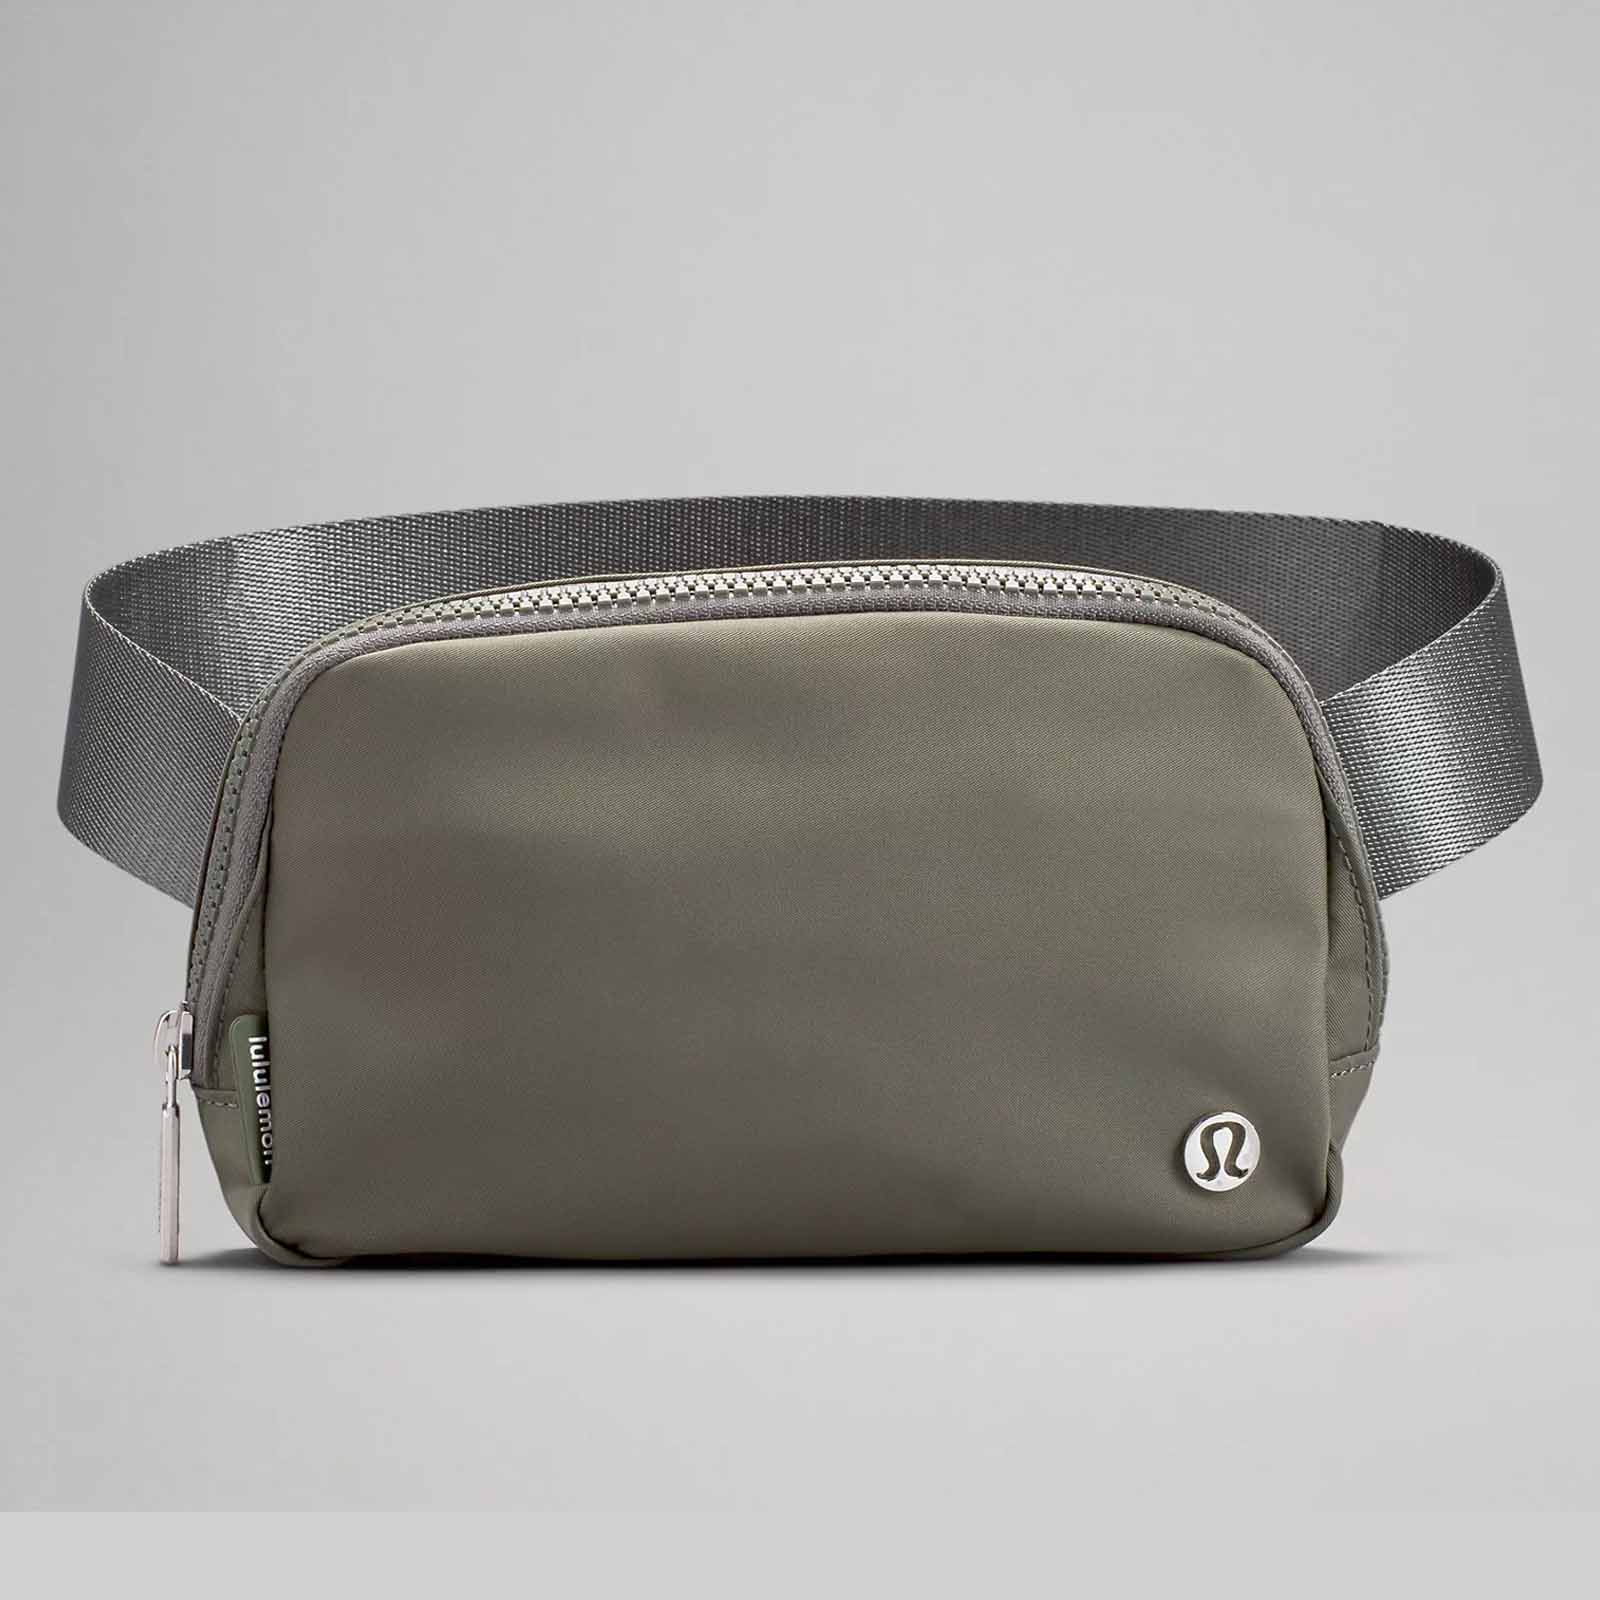 Lululemon Everywhere Belt Bag 1L in grey sage